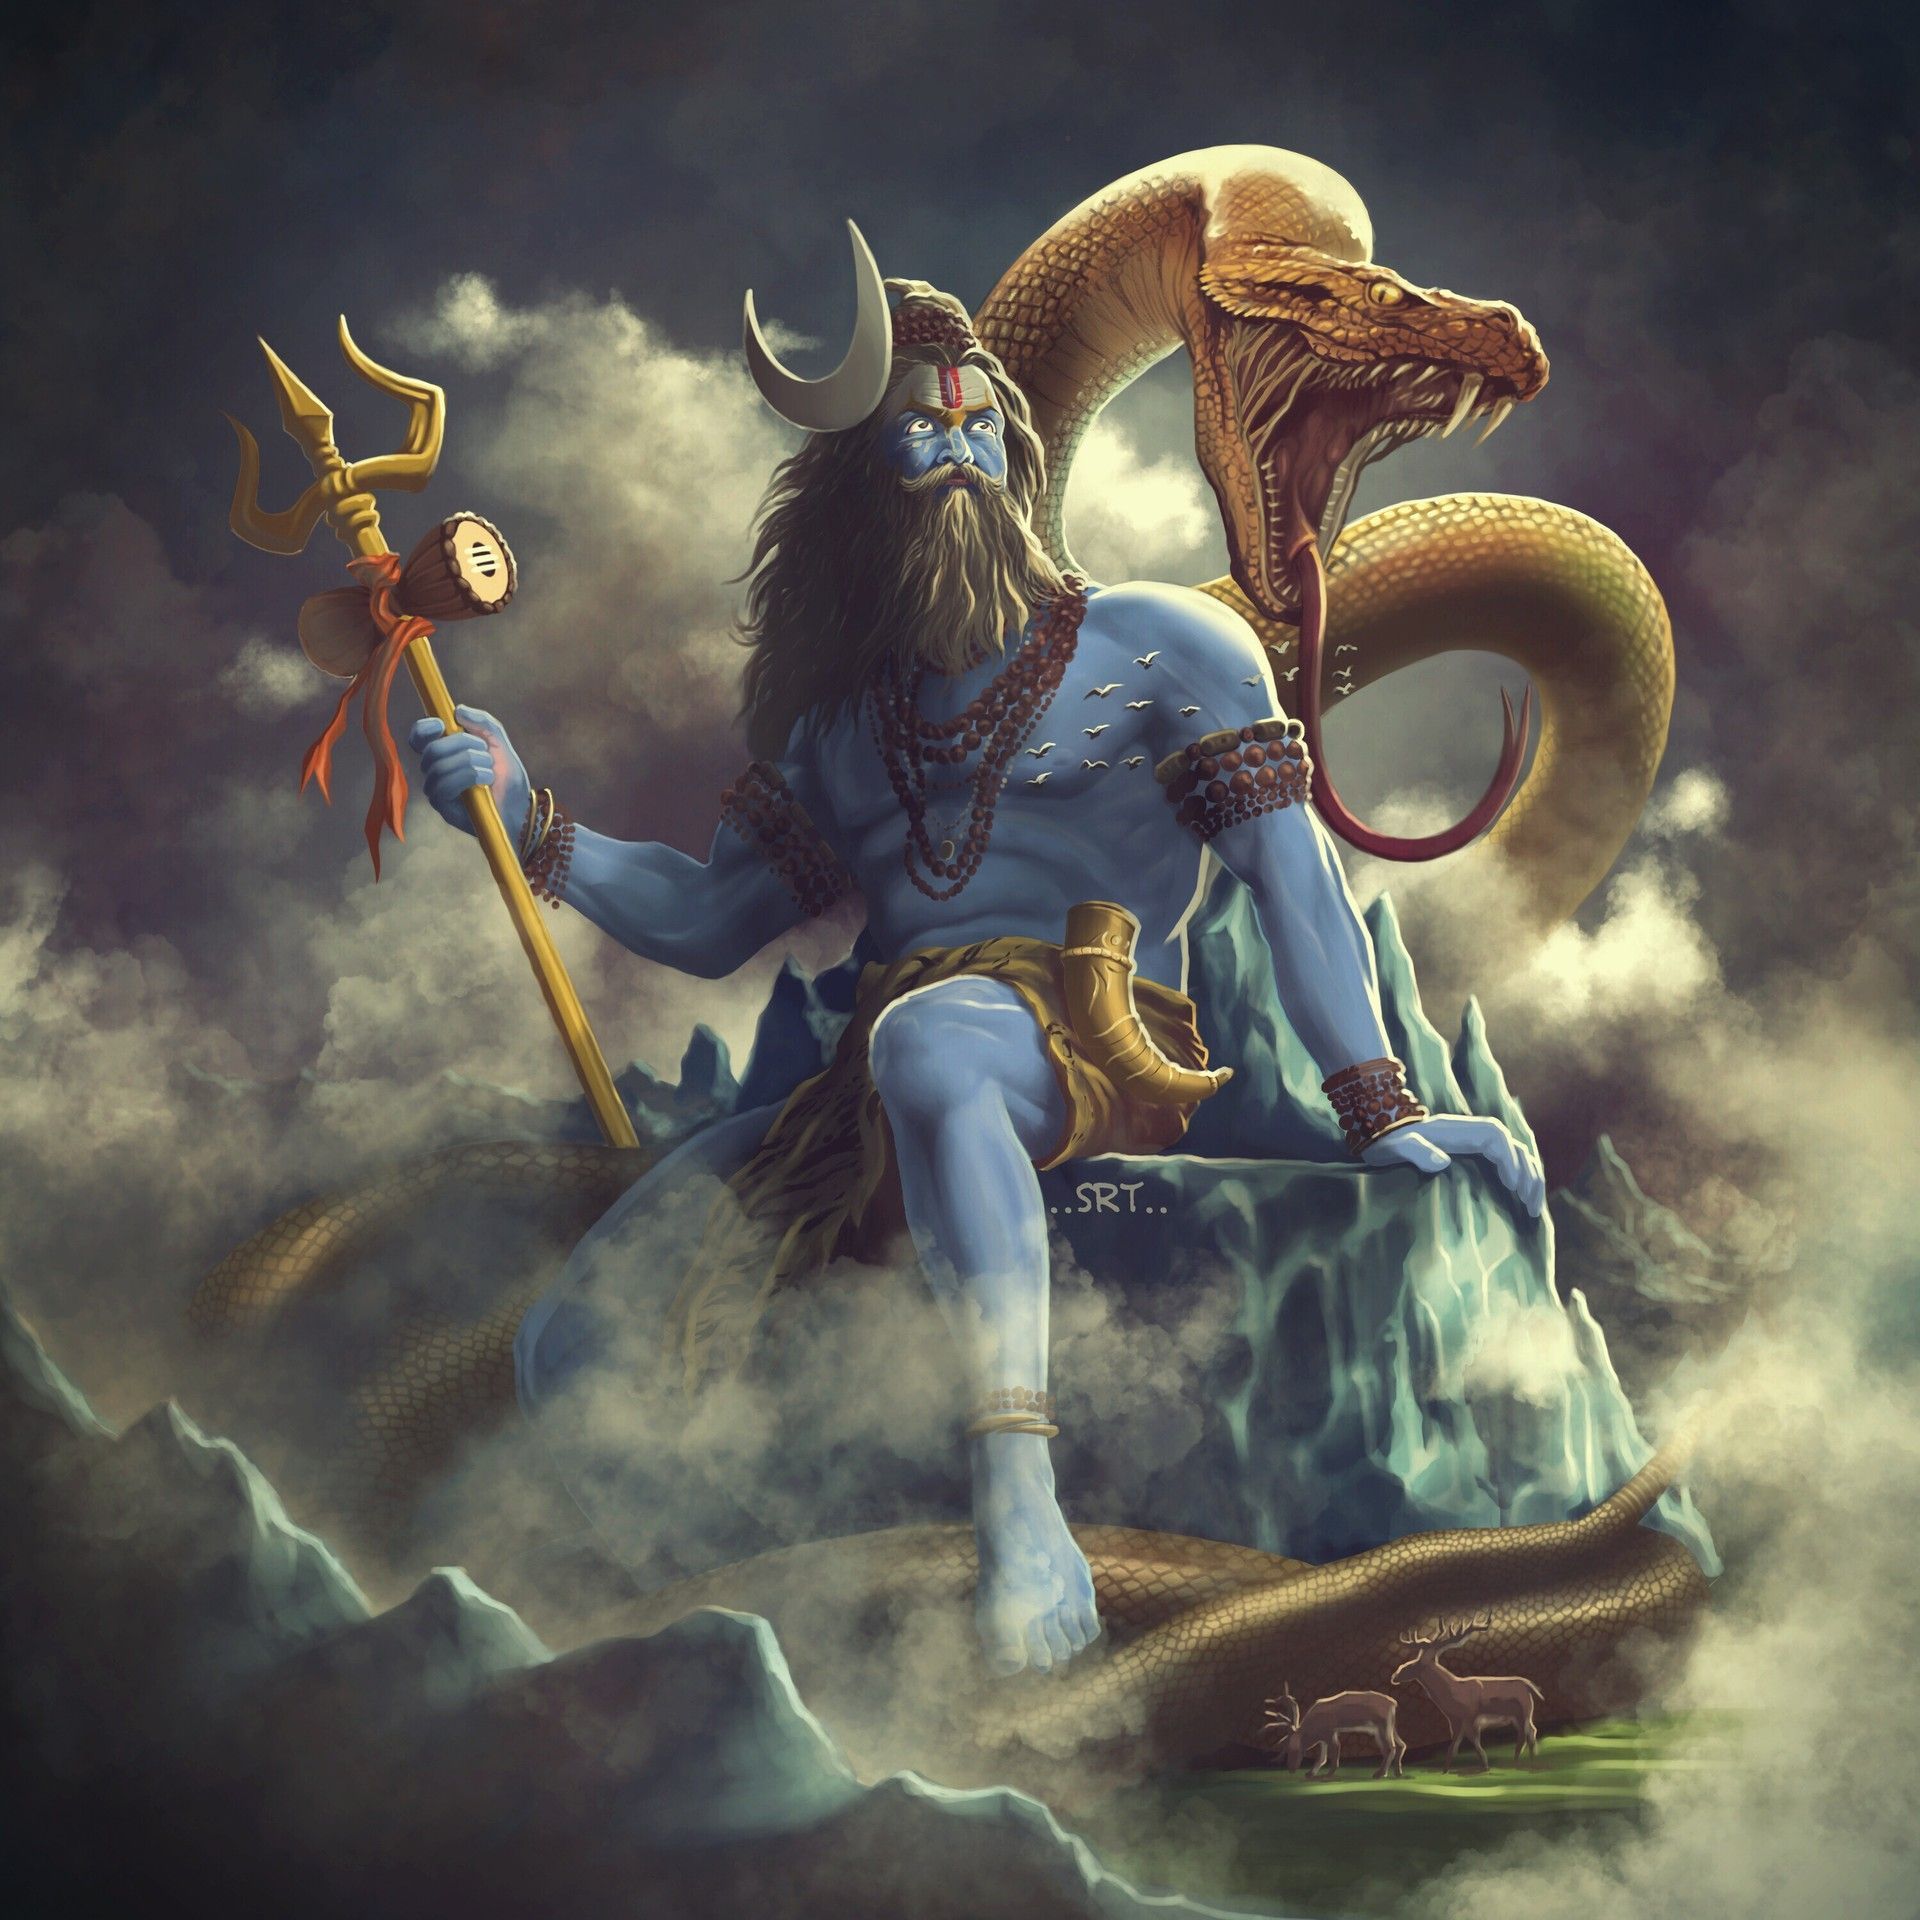 Angry Lord Shiva Wallpaper Free Angry Lord Shiva